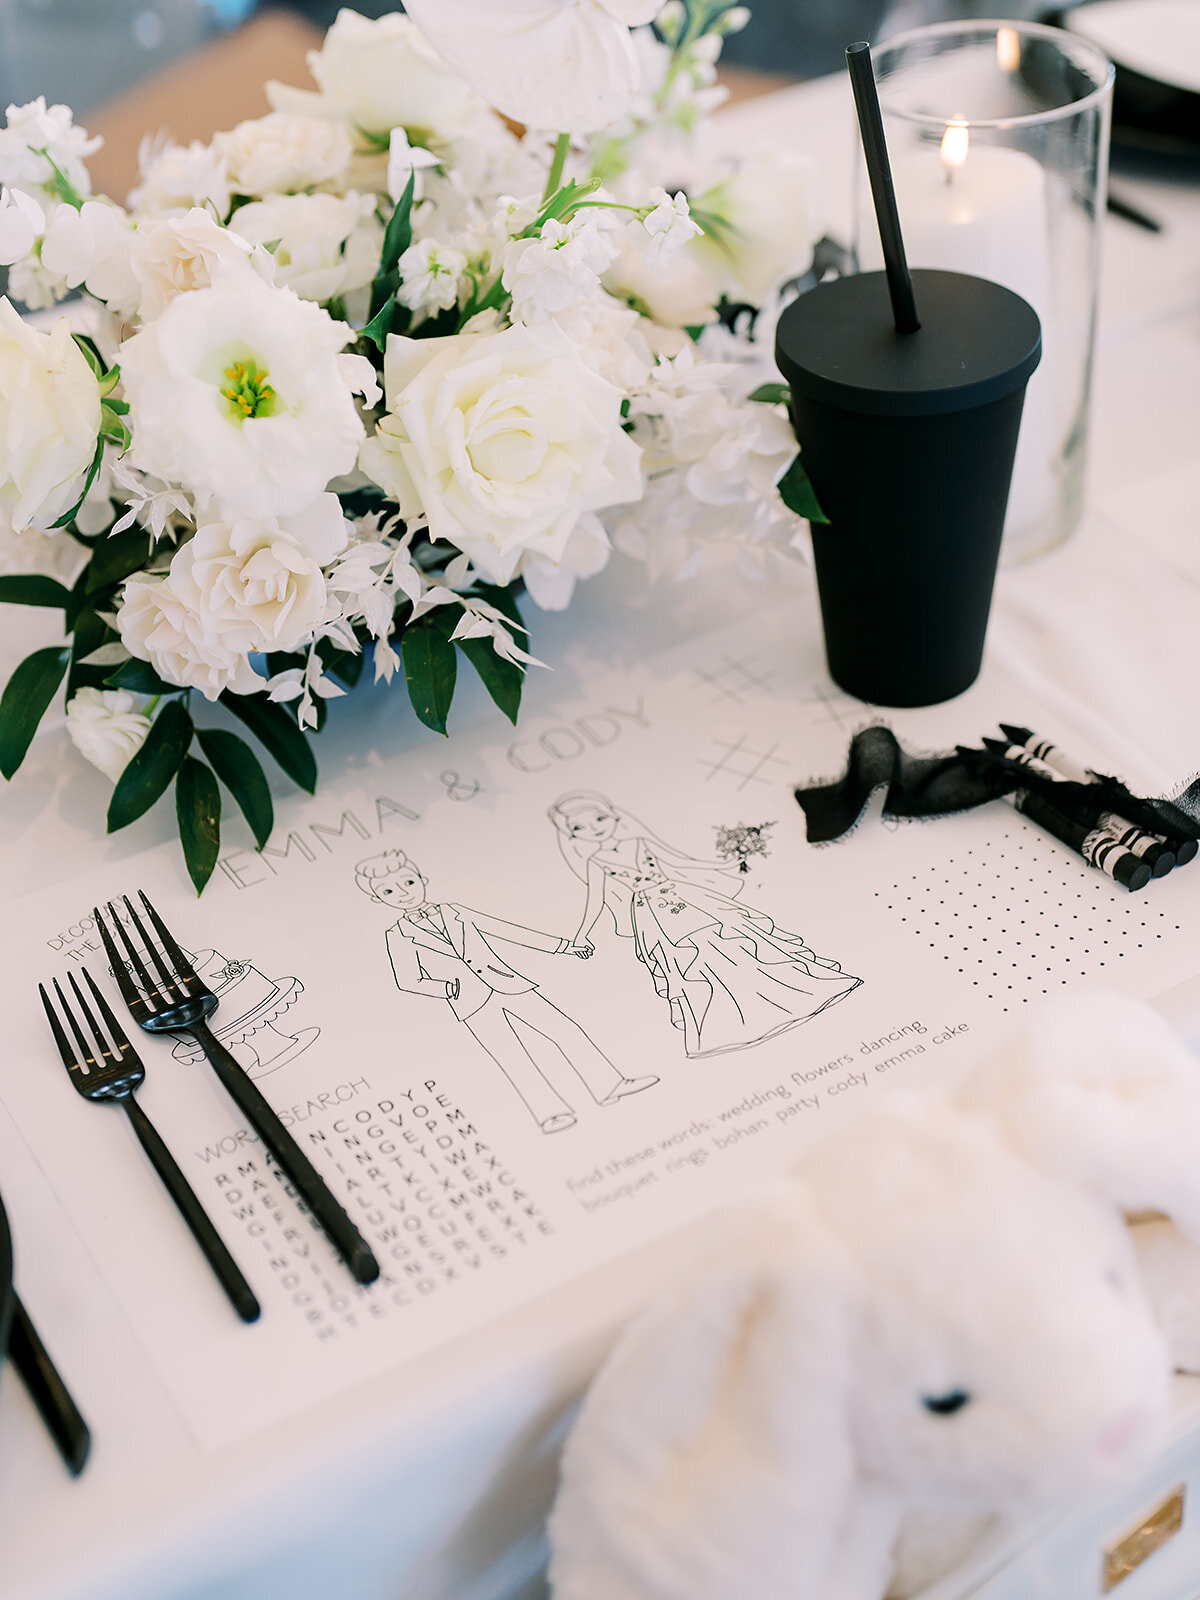 Luxury Black Tie Wedding | Owl & Envelope | Custom Wedding Stationery and Signage | New York Bride, black and white wedding, California wedding ideas | via owlandenvelope.com